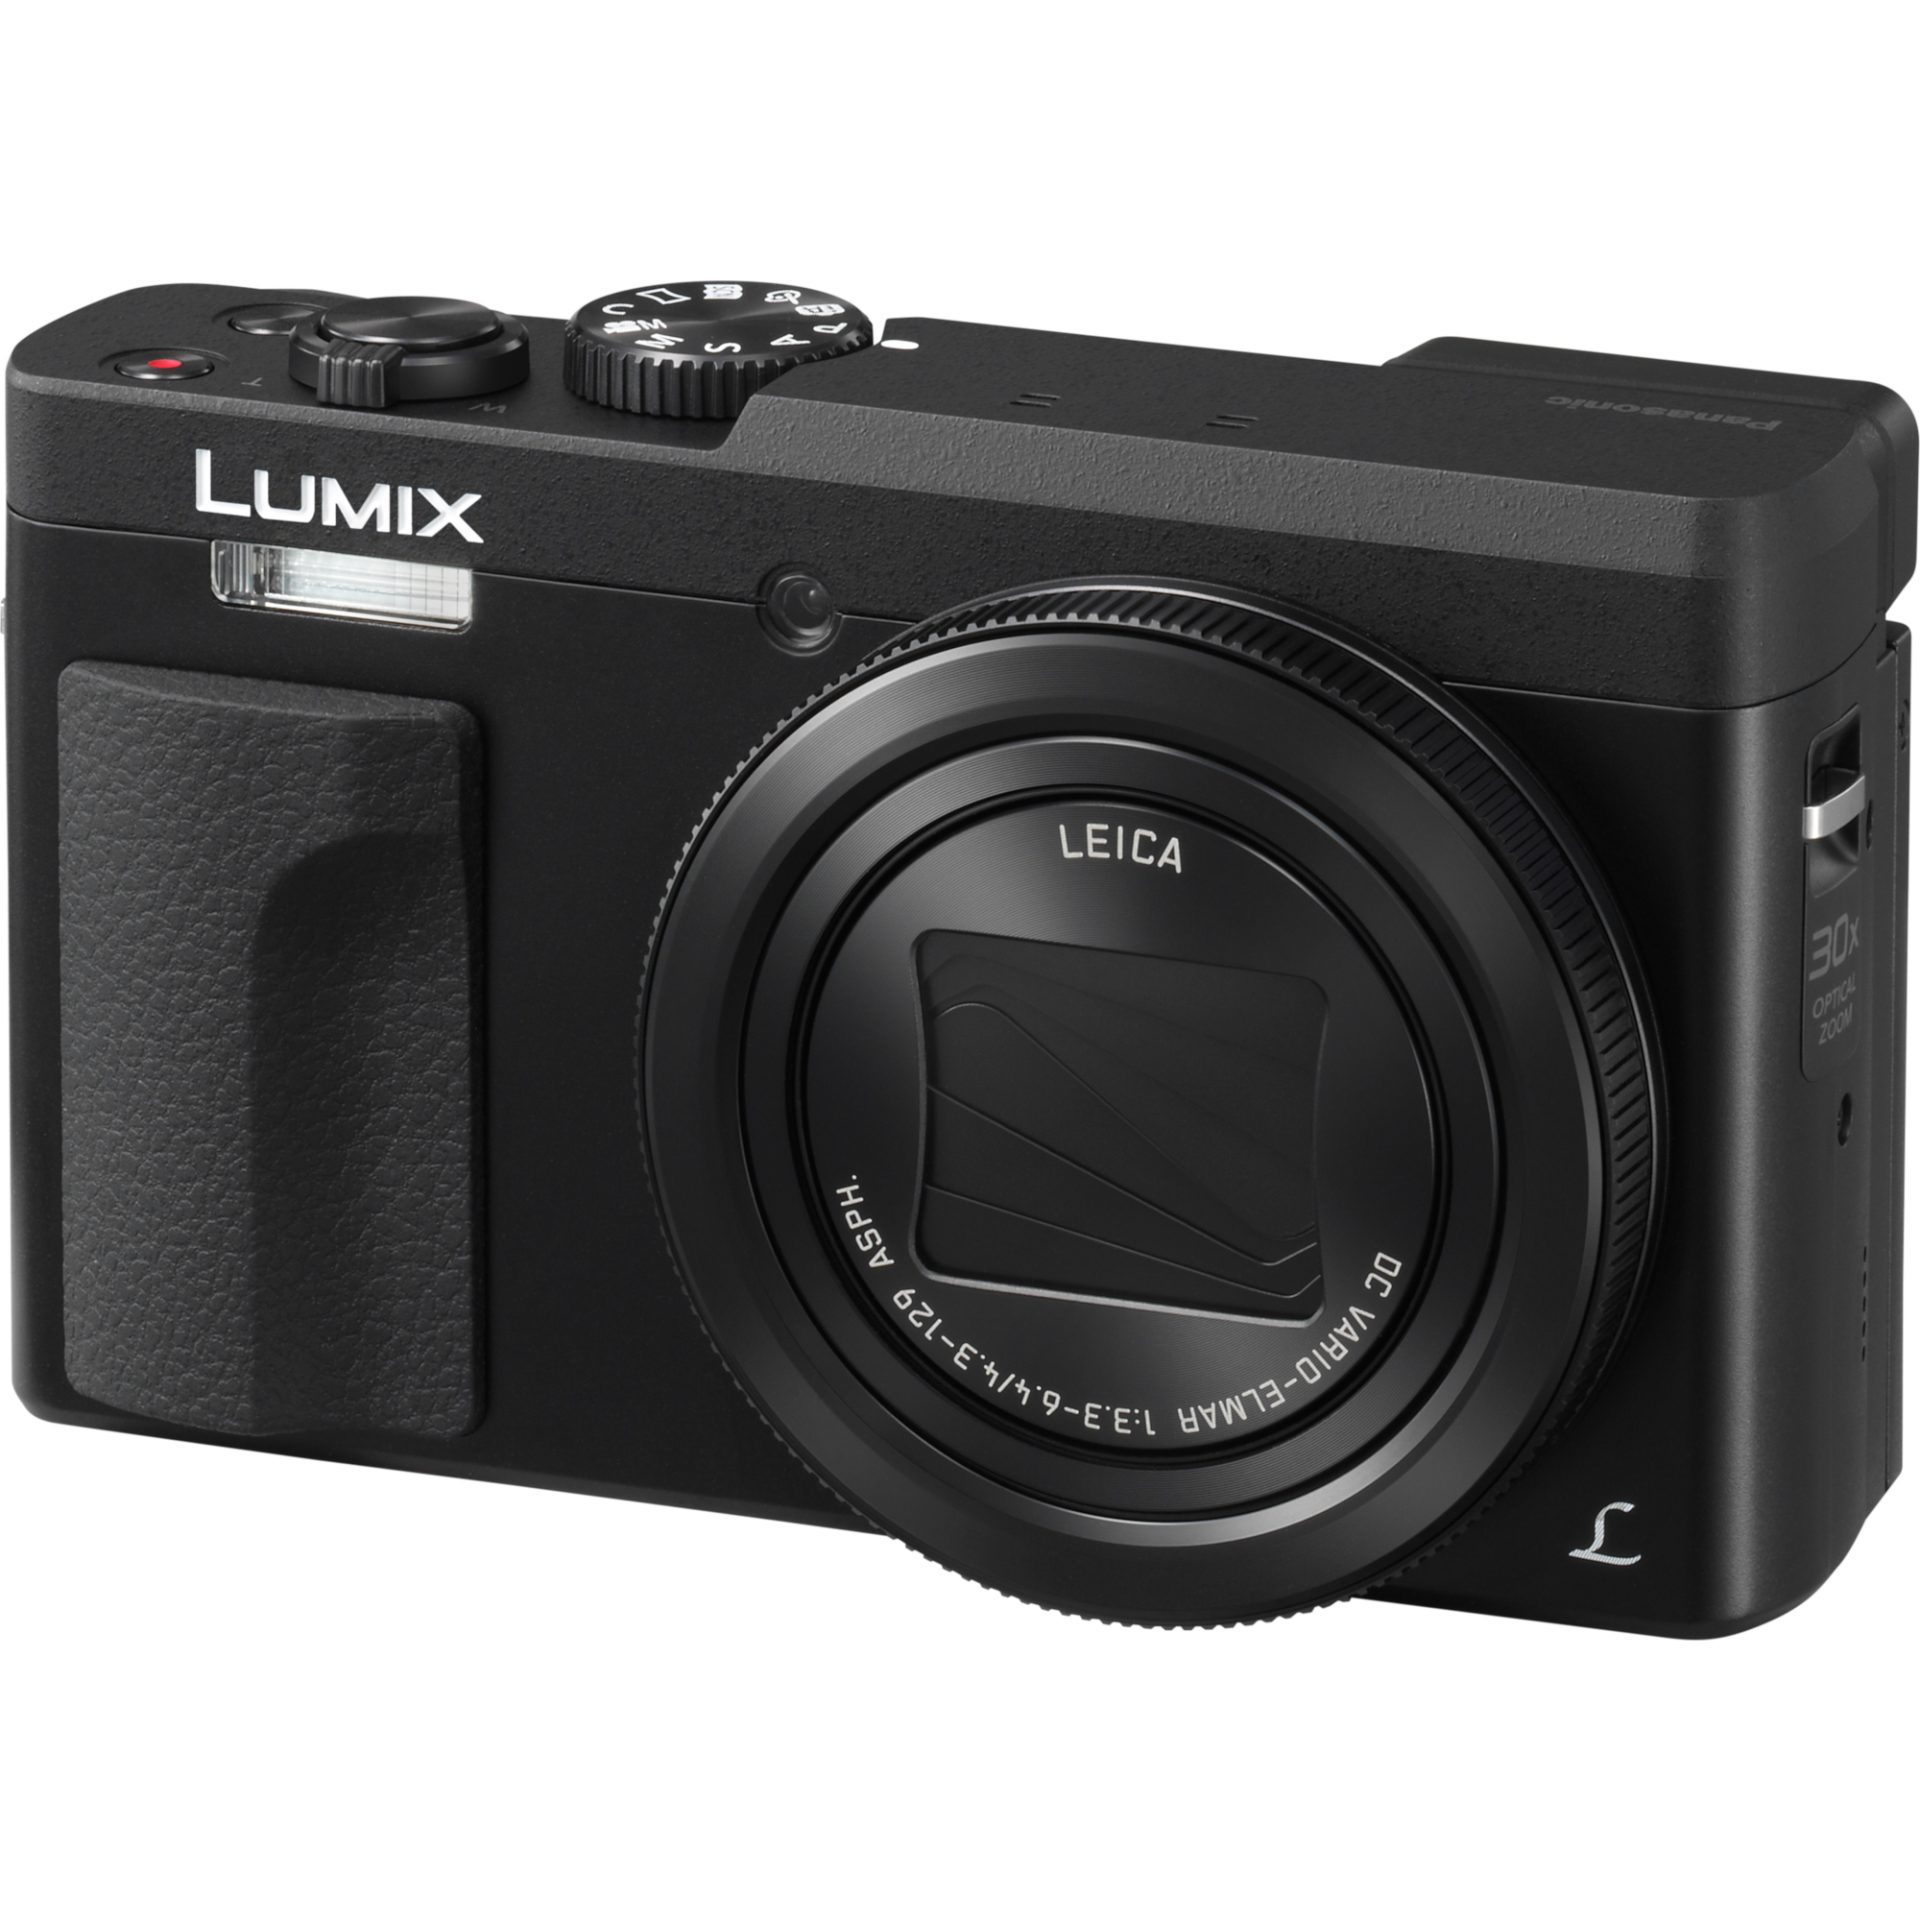 Panasonic DC-TZ90 Lumix kompaktní fotoaparát (20.3MP MOS senzor, 30x optický zoom, 4K selfie, 4K video, Post Focus, LVF 1166tys hledáček), černá